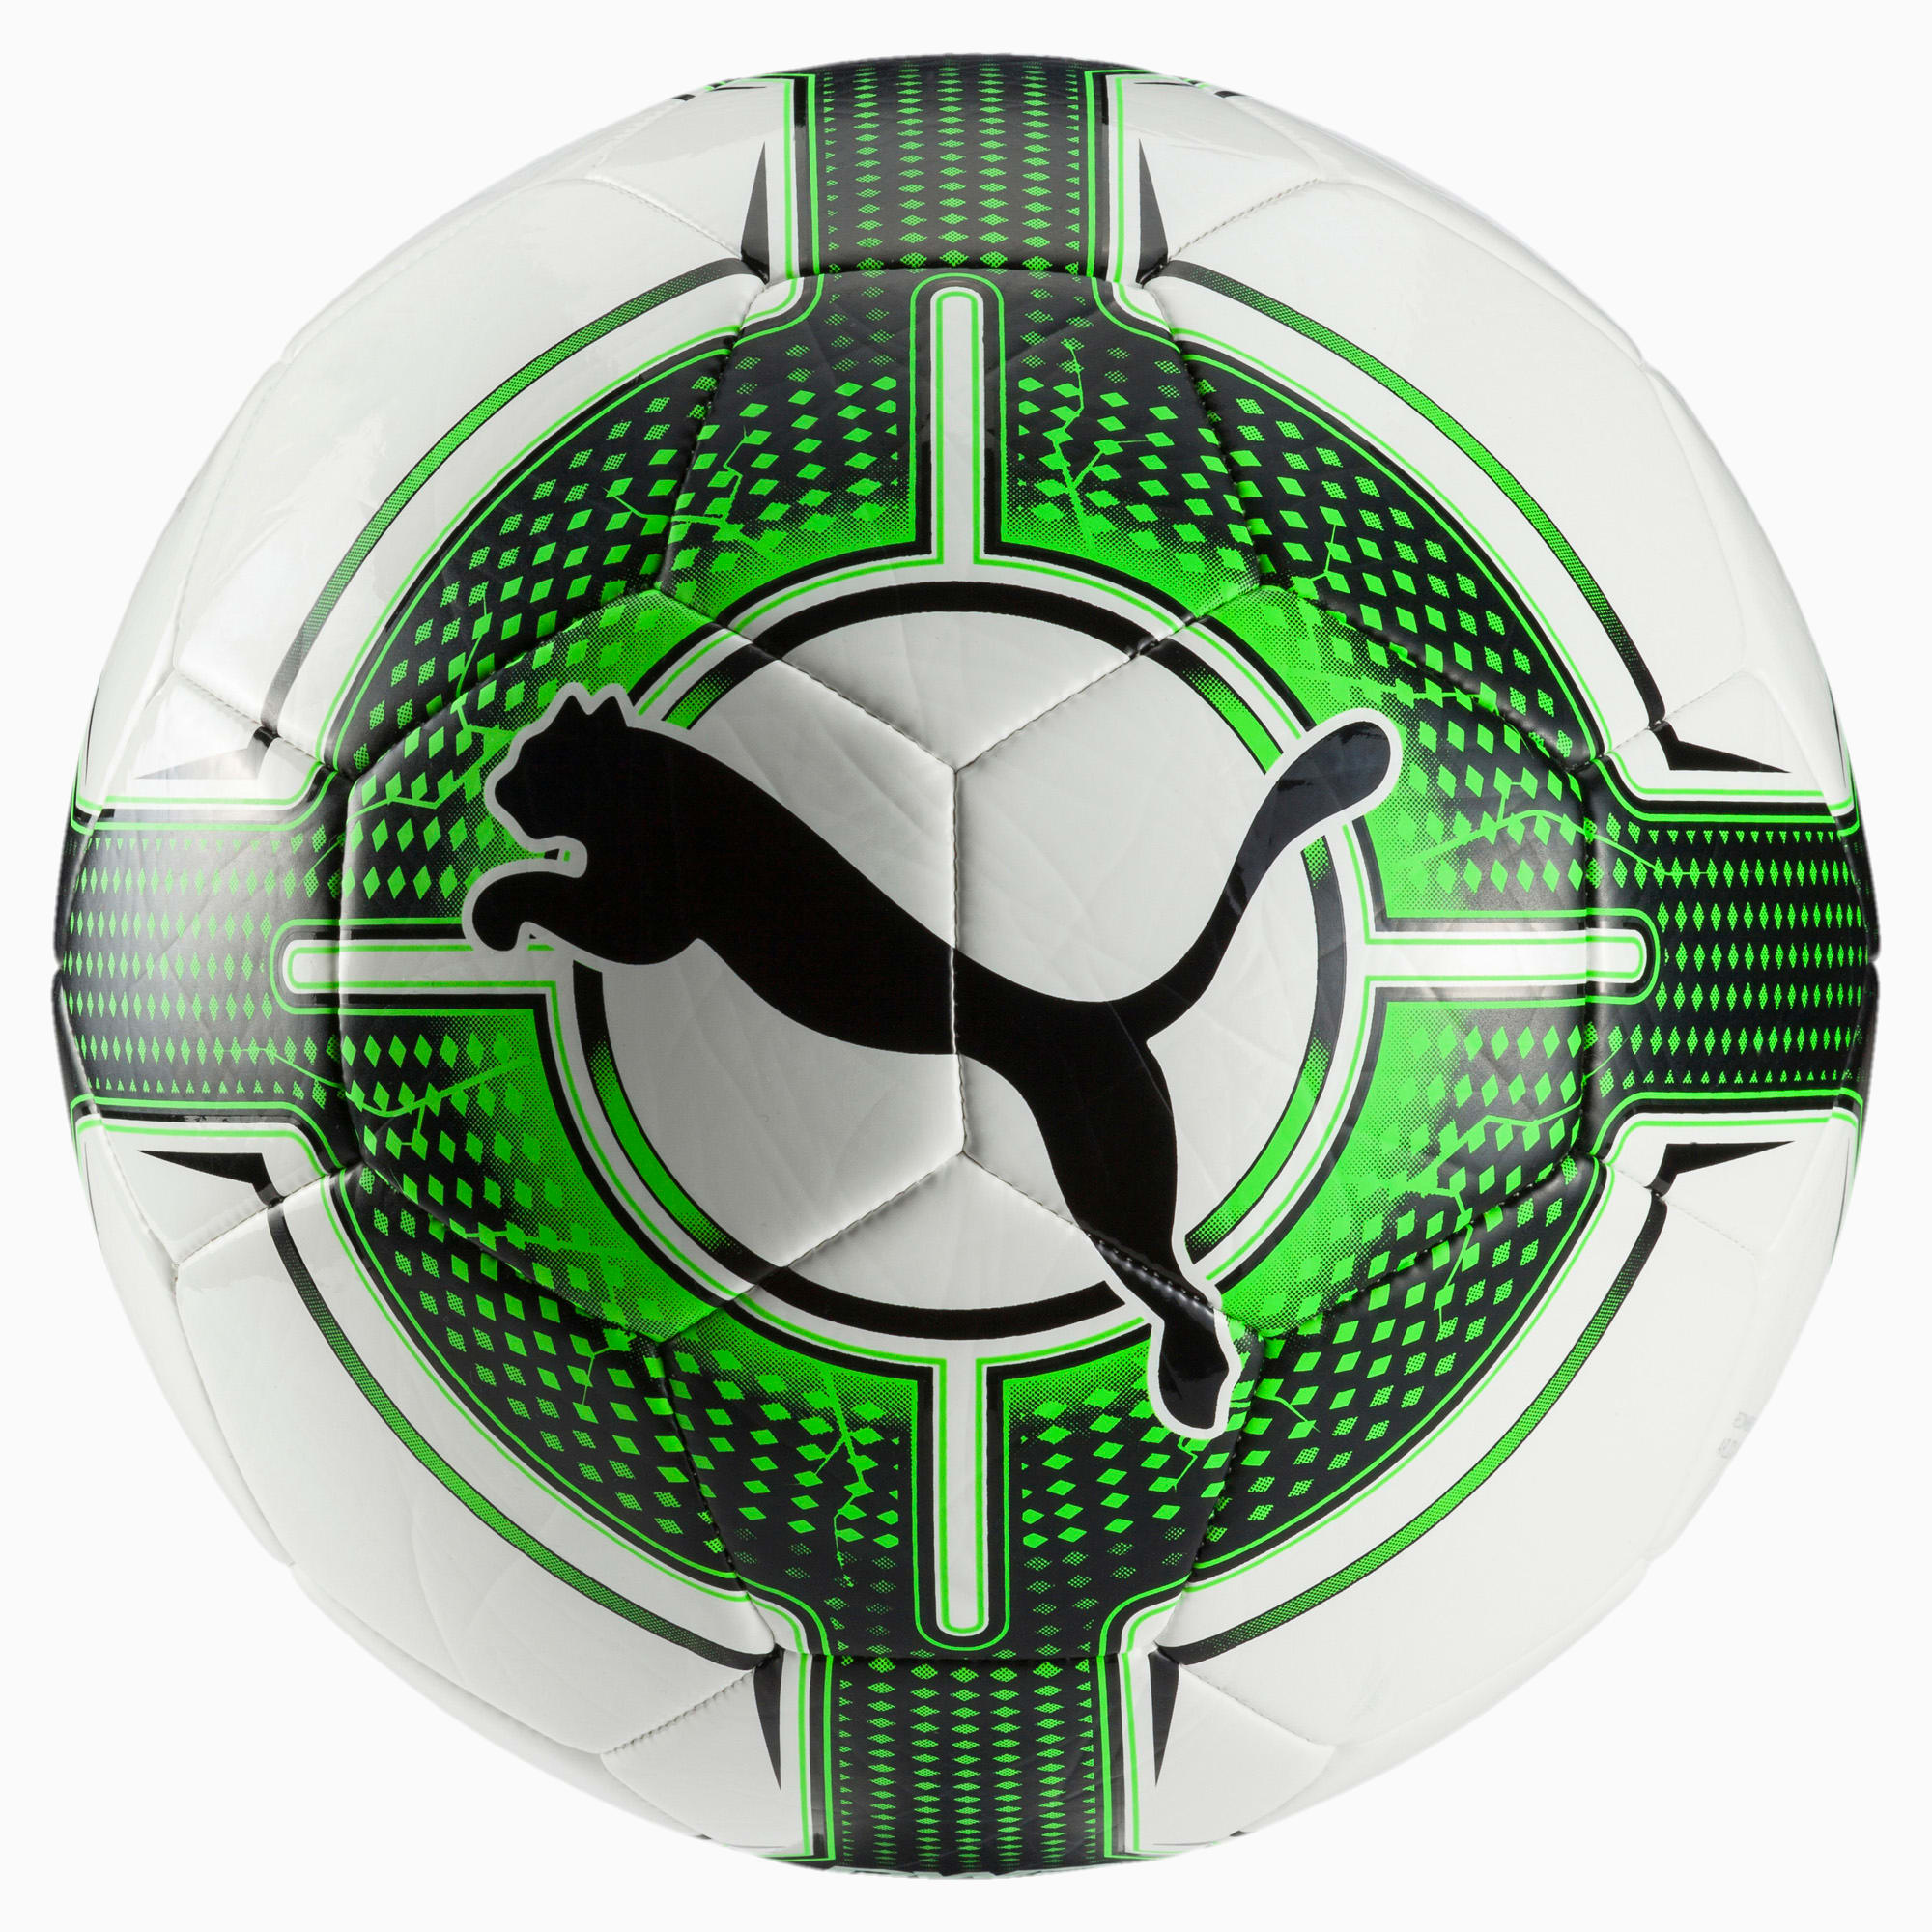 evoPOWER 6.3 Training Soccer Ball | PUMA US